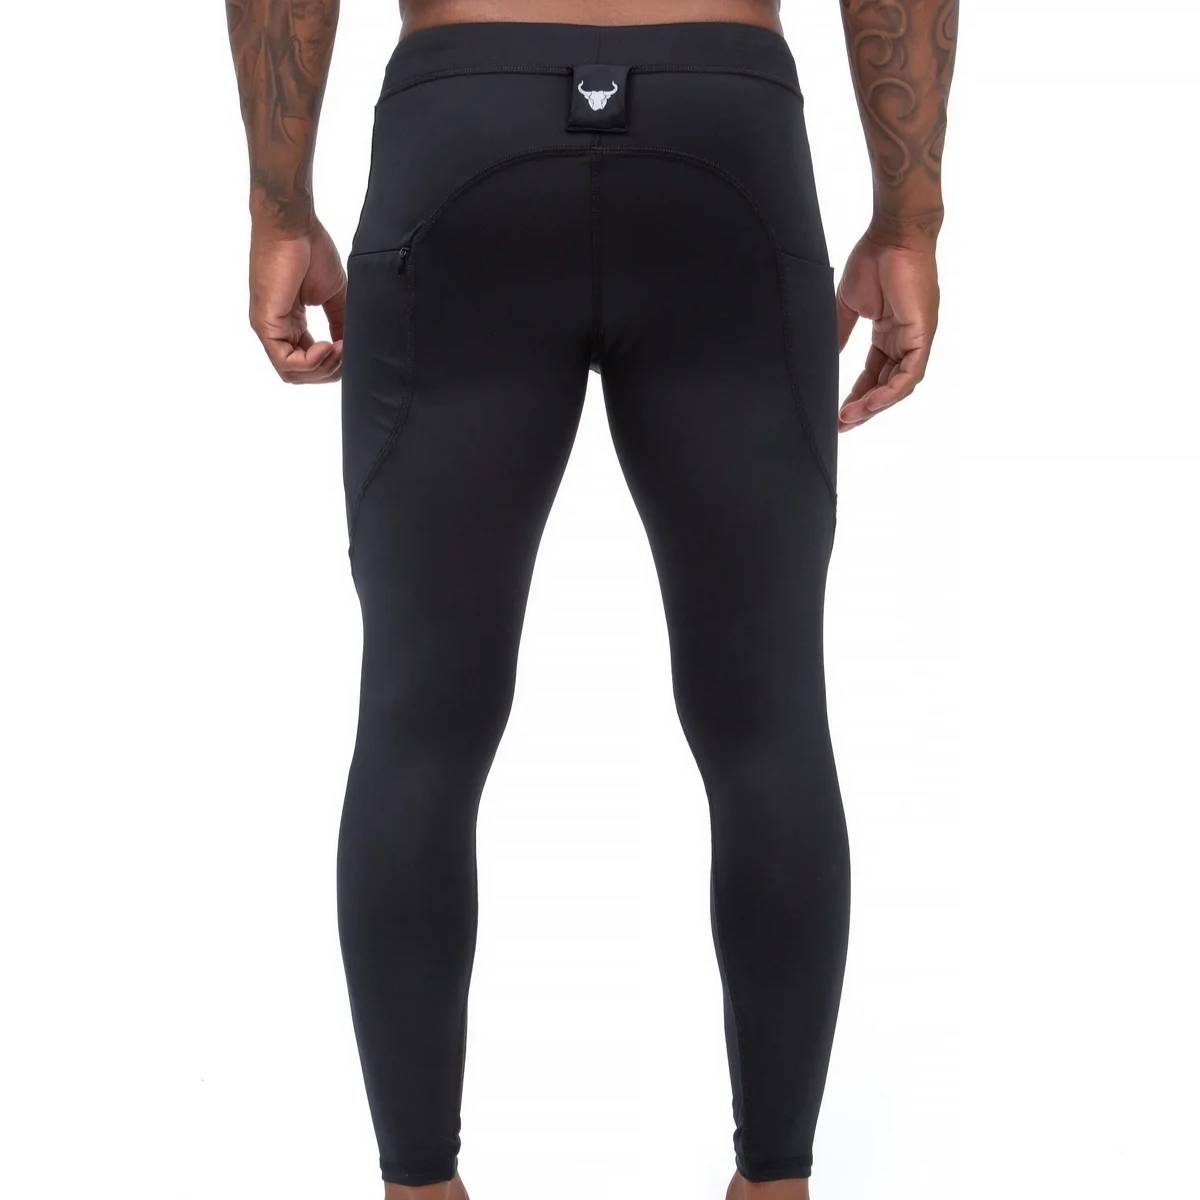 Men's Thermal Compression Pants Athletic Leggings Base Layer Bottoms  Underwear Slim Legging Tight Pant Trousers - Walmart.com